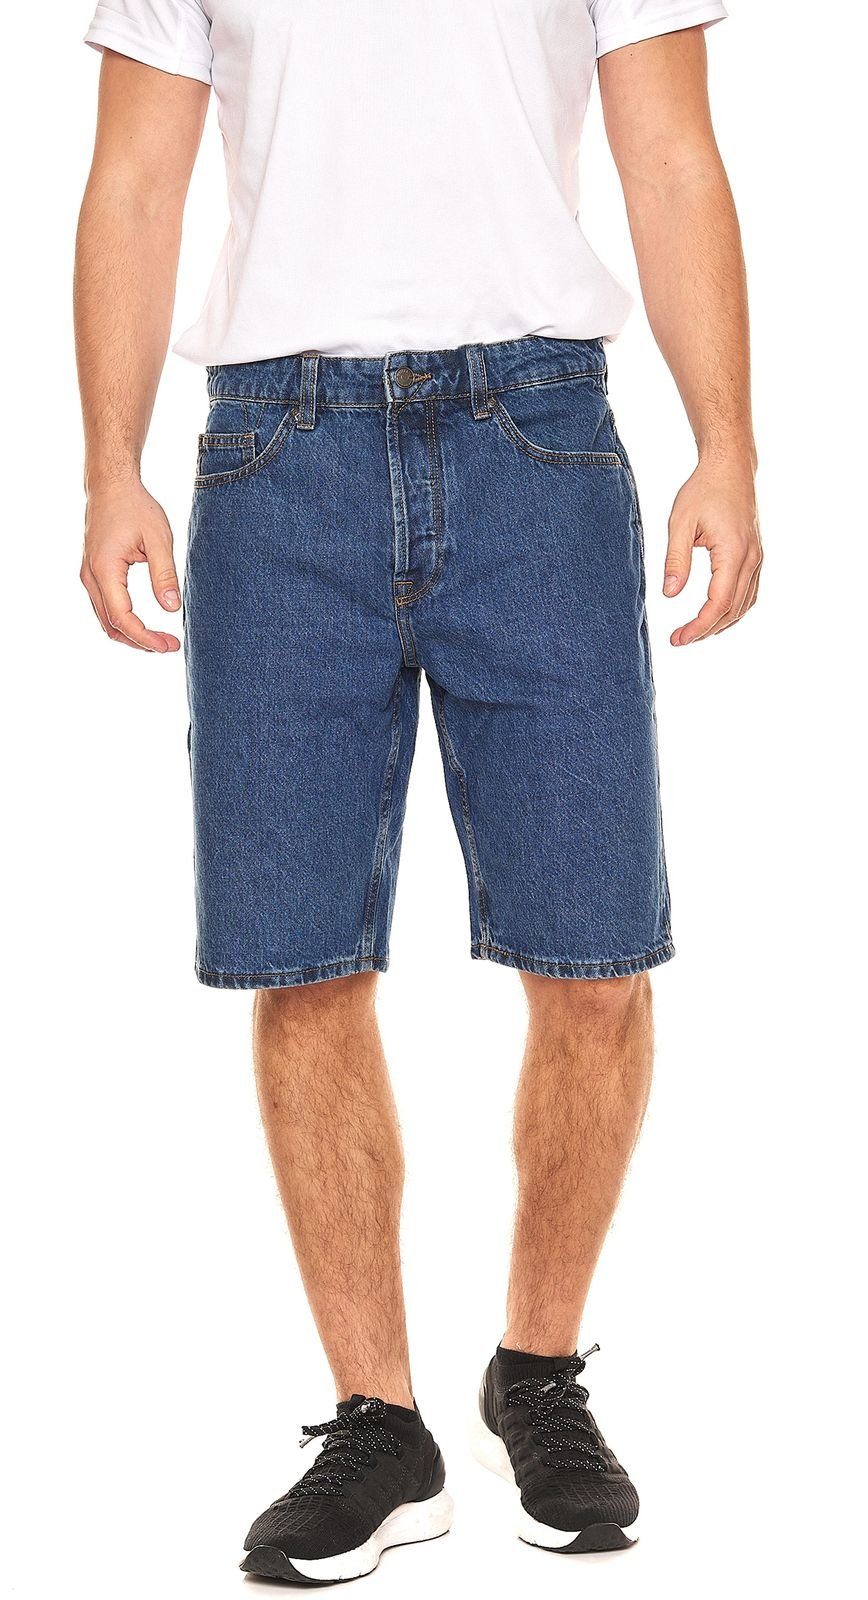 ONLY & SONS Stoffhose ONLY & SONS Avi Herren kurze Hose gerade Jeans-Shorts 22021906 Bermuda Dunkelblau